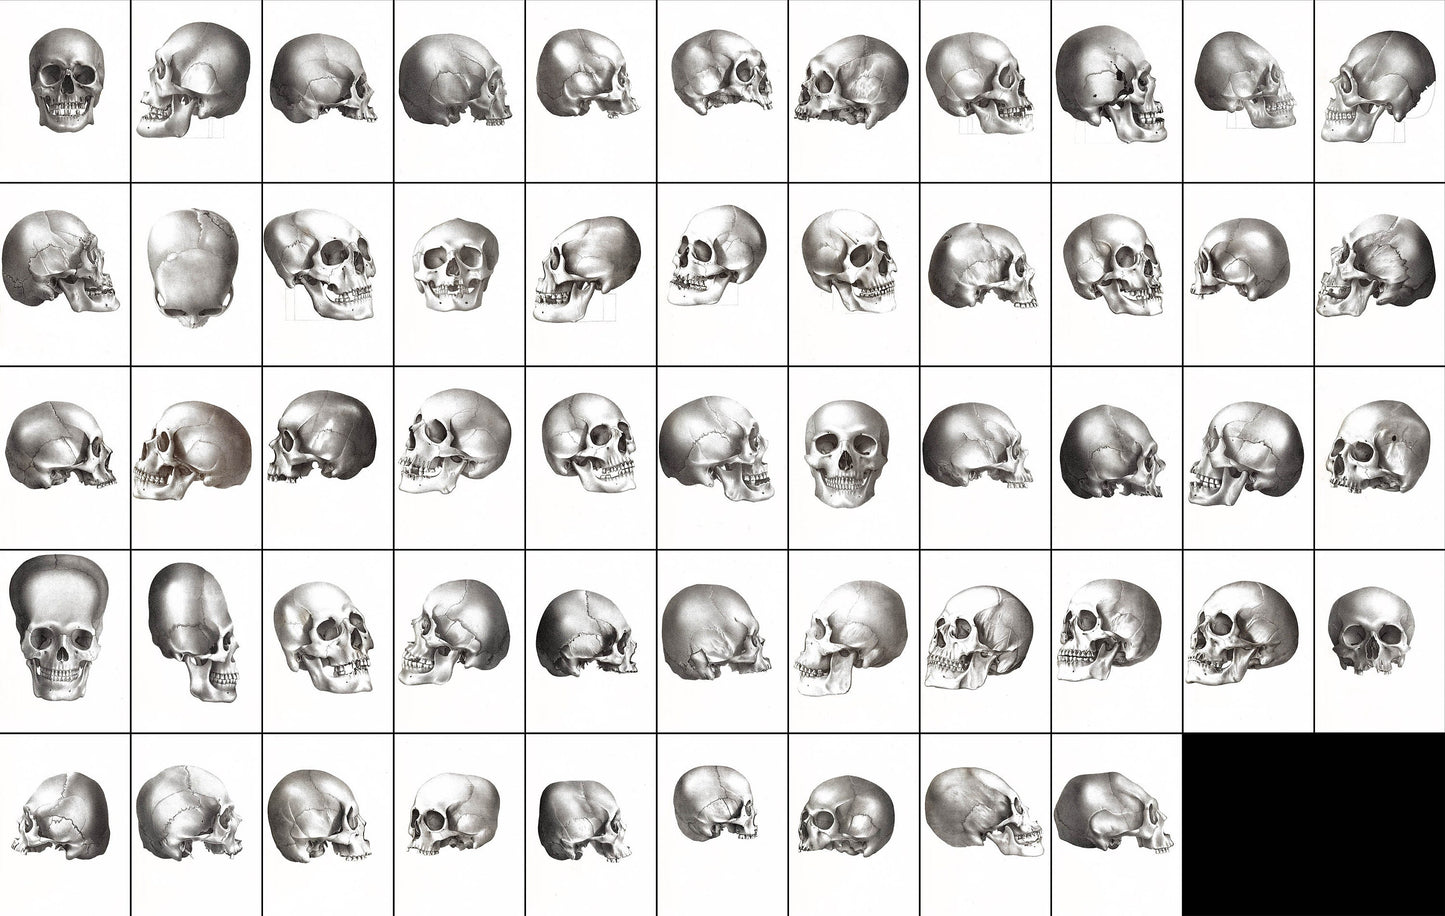 Human Skull Illustrations [53 Images]